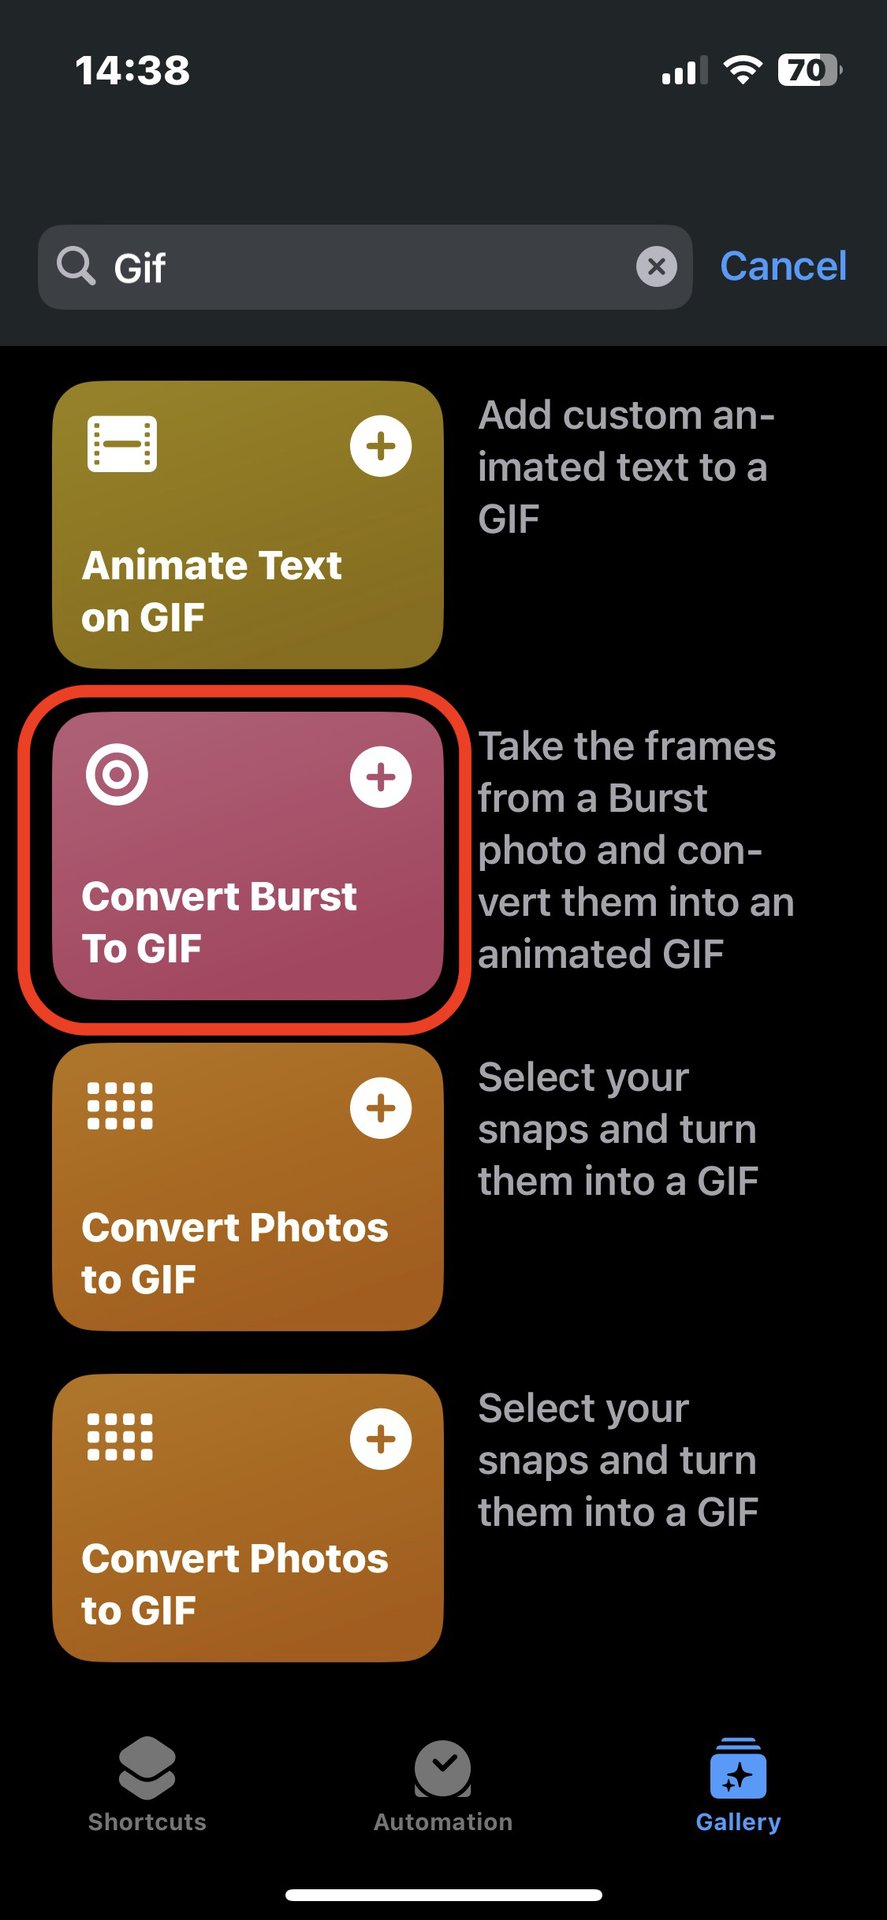 iphone shortcuts app convert burst to gif